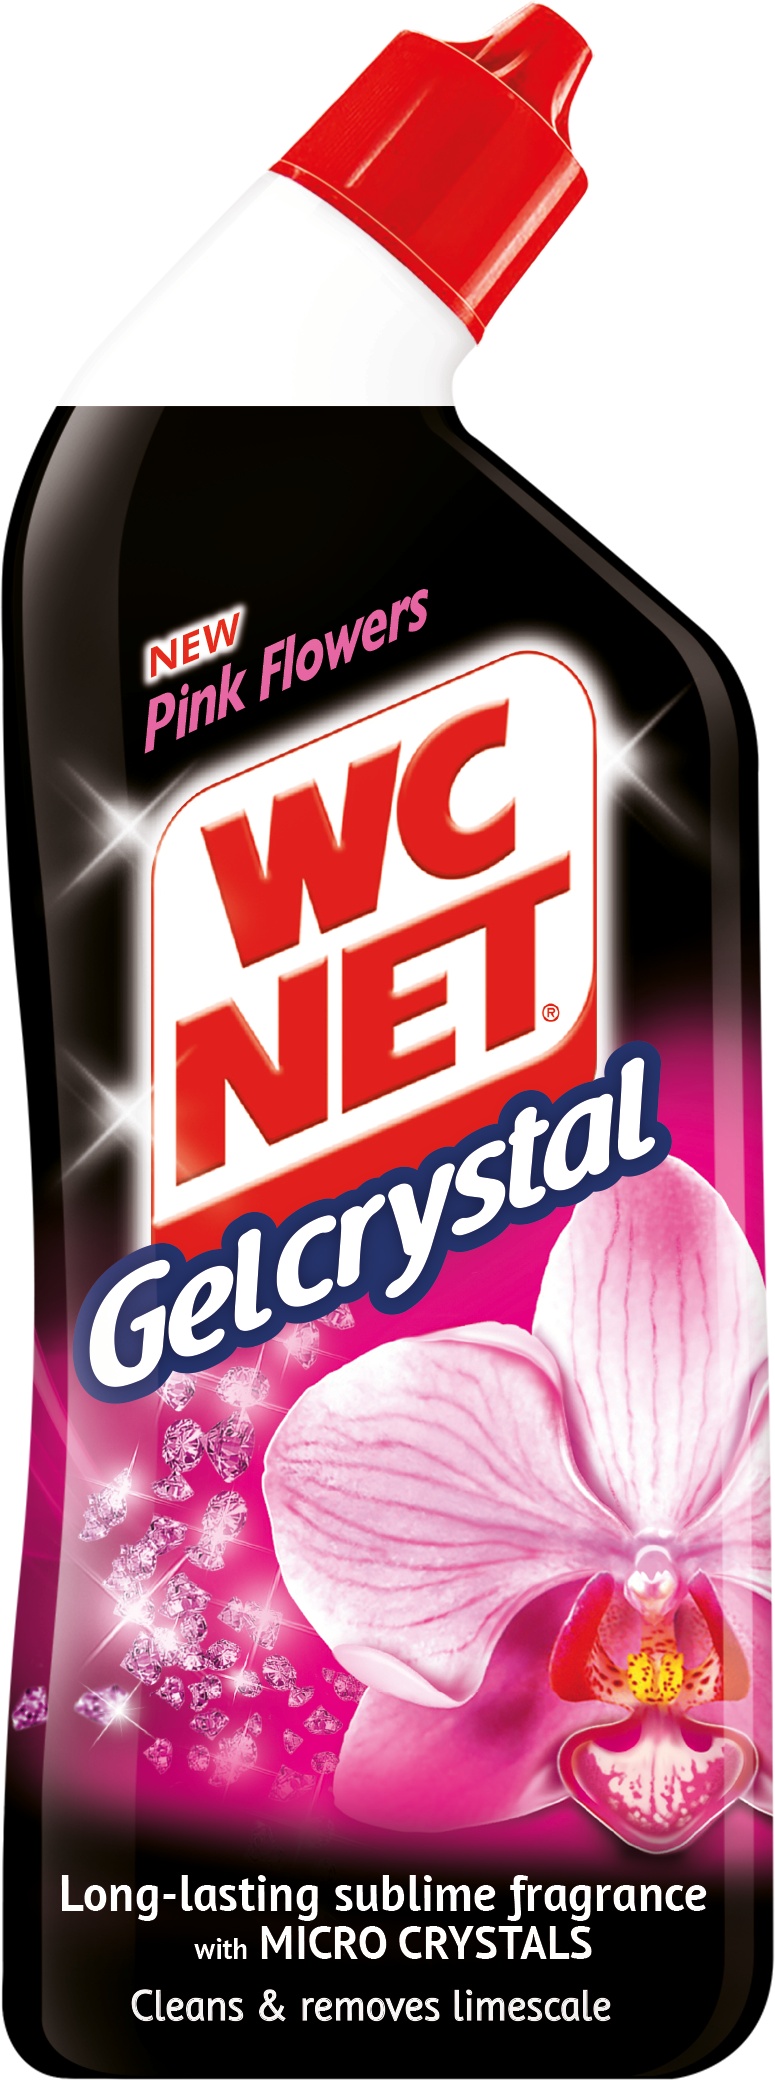 Slika za Wc net Cristal gel pink flovers 750ml